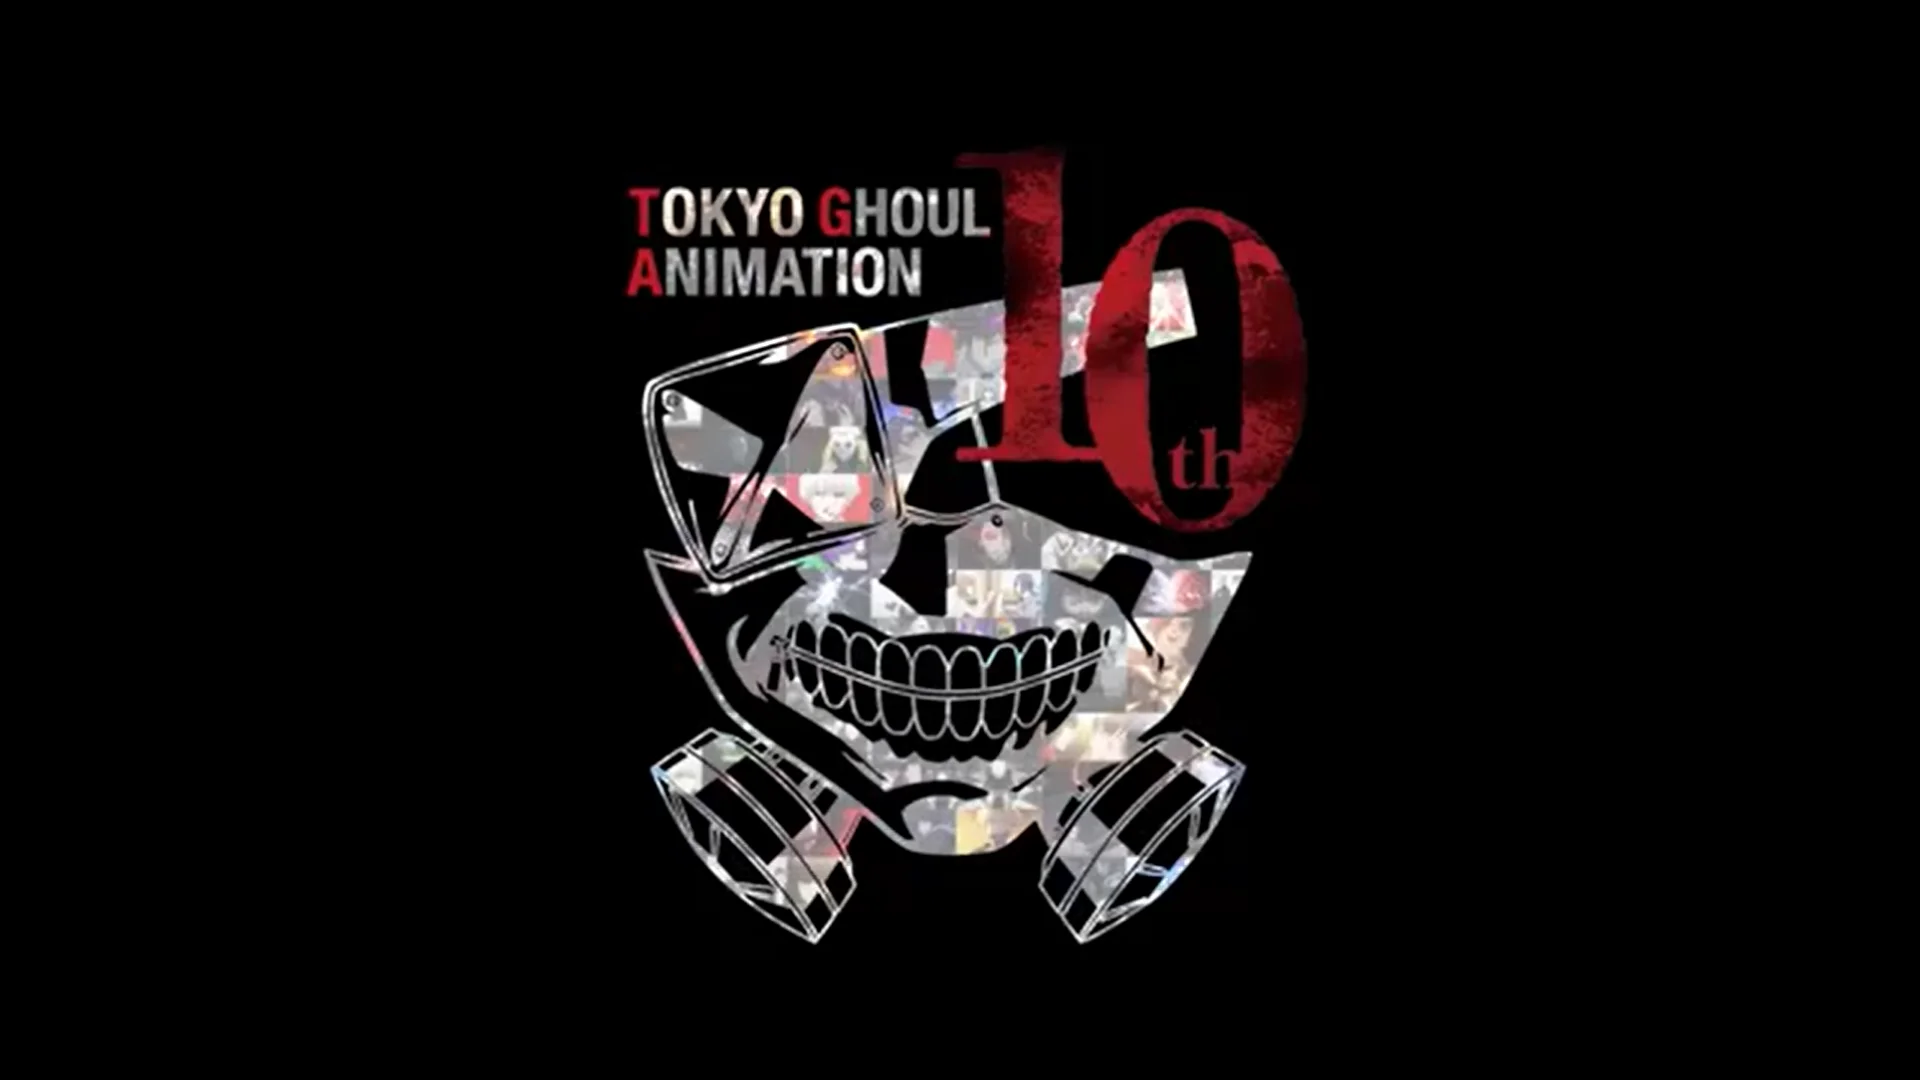 Tokyo Ghoul 10th anniversary anime otaku mantra